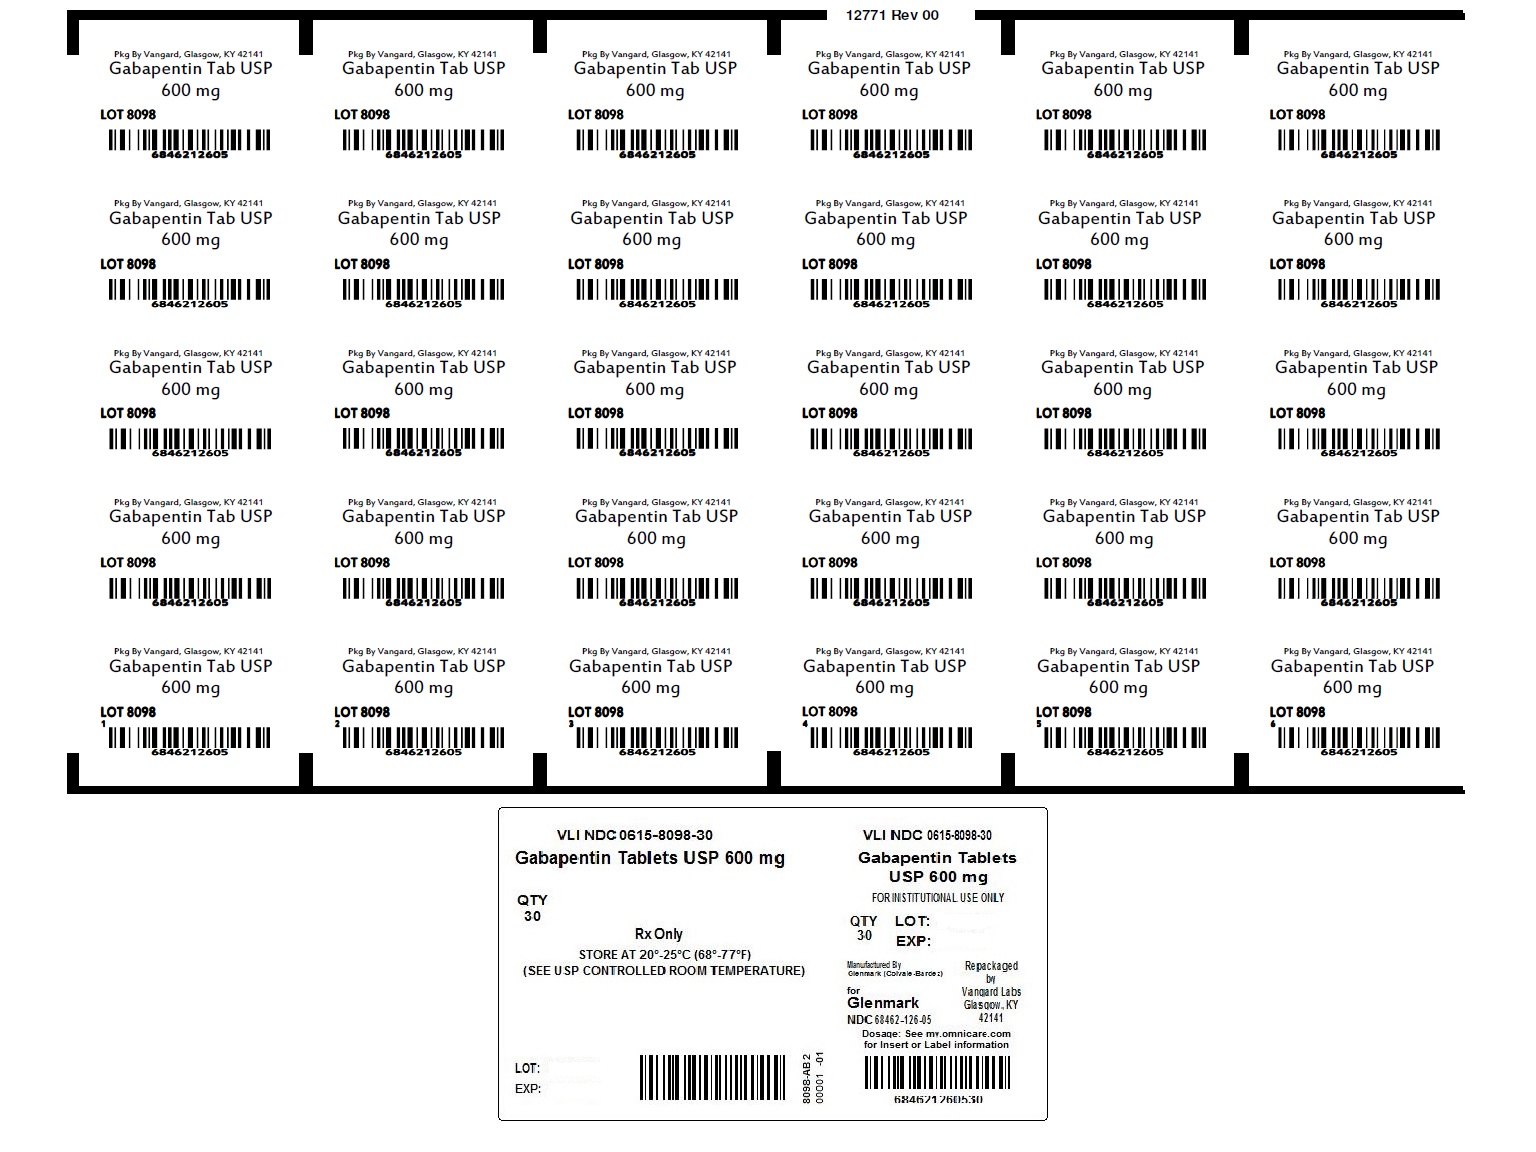 Gabapentin 600mg Tabs unit dose label